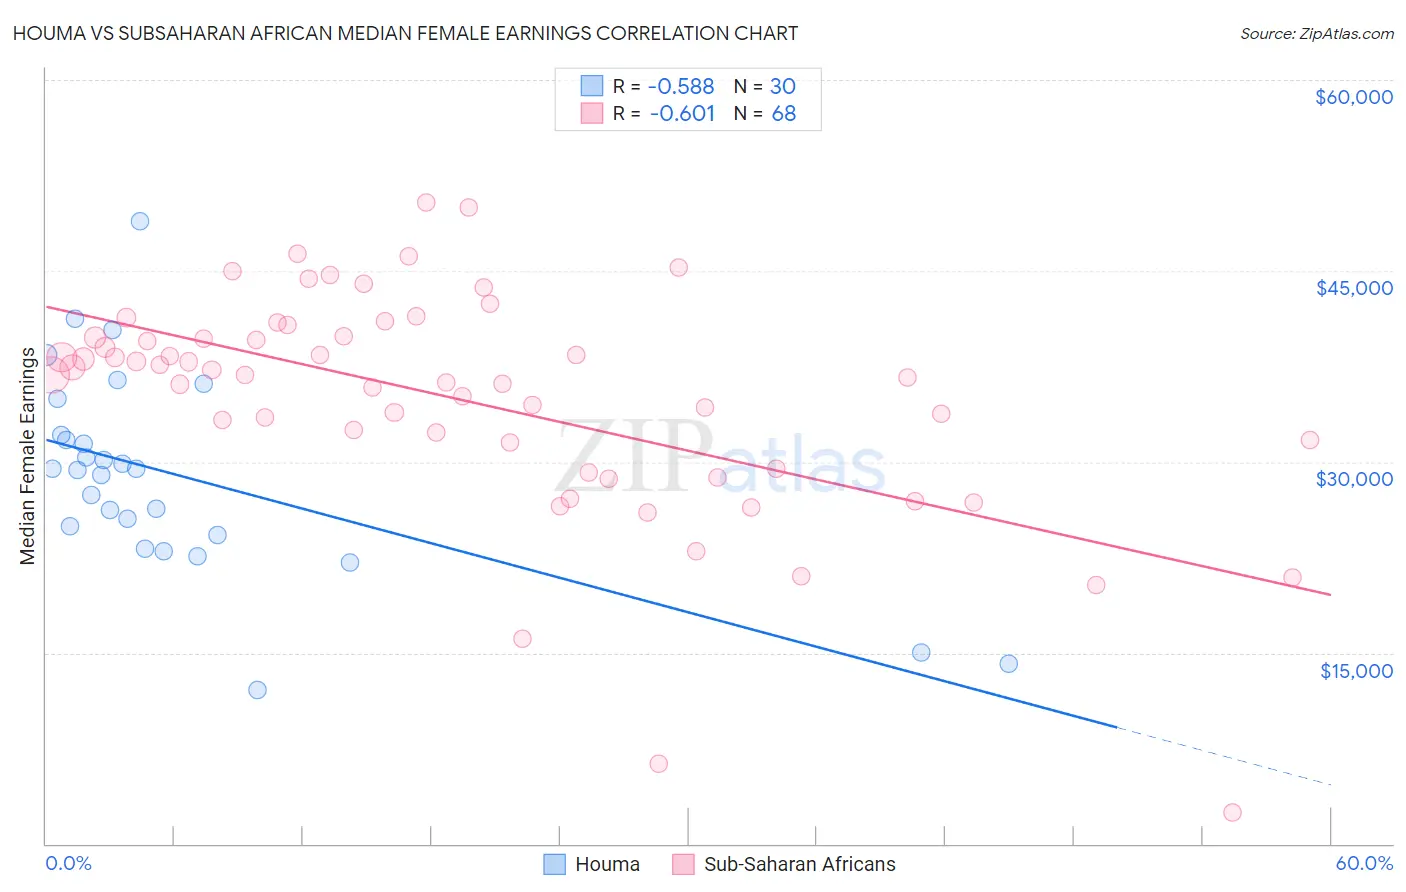 Houma vs Subsaharan African Median Female Earnings